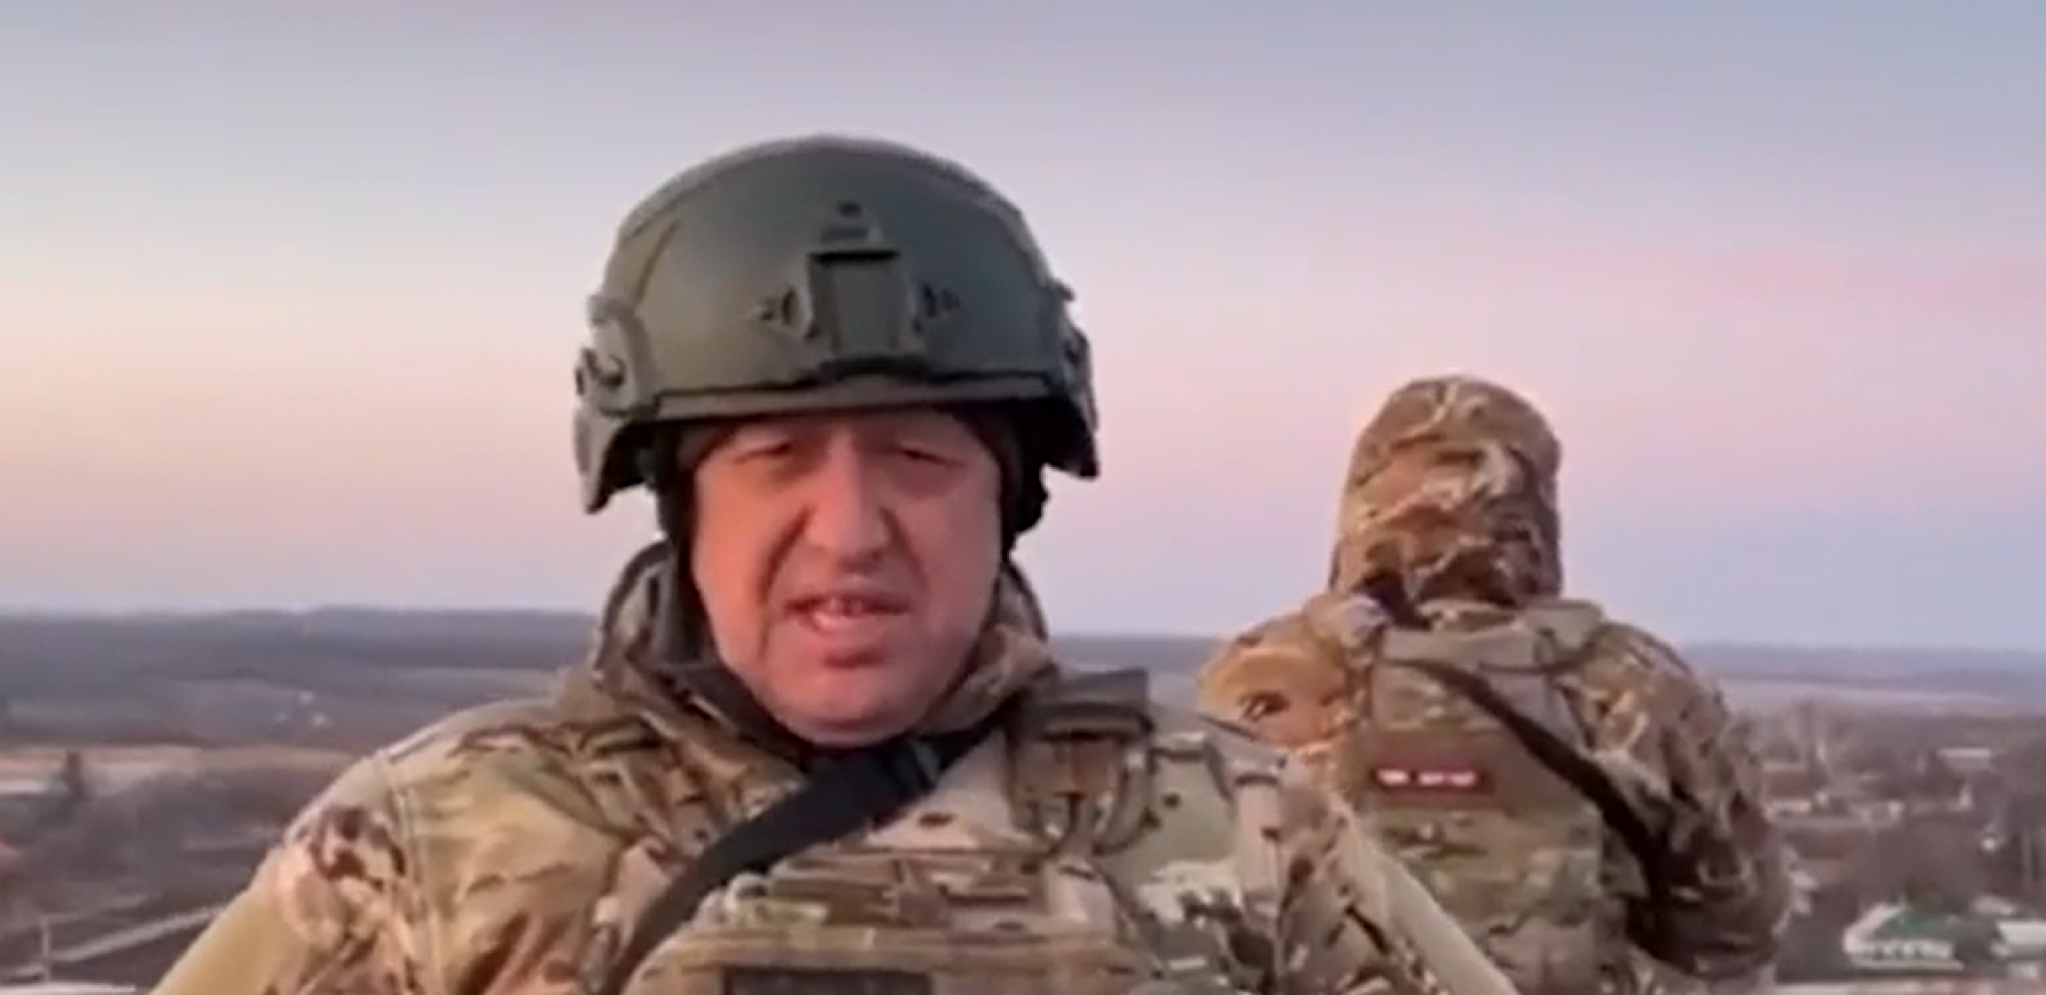 "NIKO NAM NIJE POMOGAO" Šef Vagnera, Prigožin, kritikovao rusku vojsku?